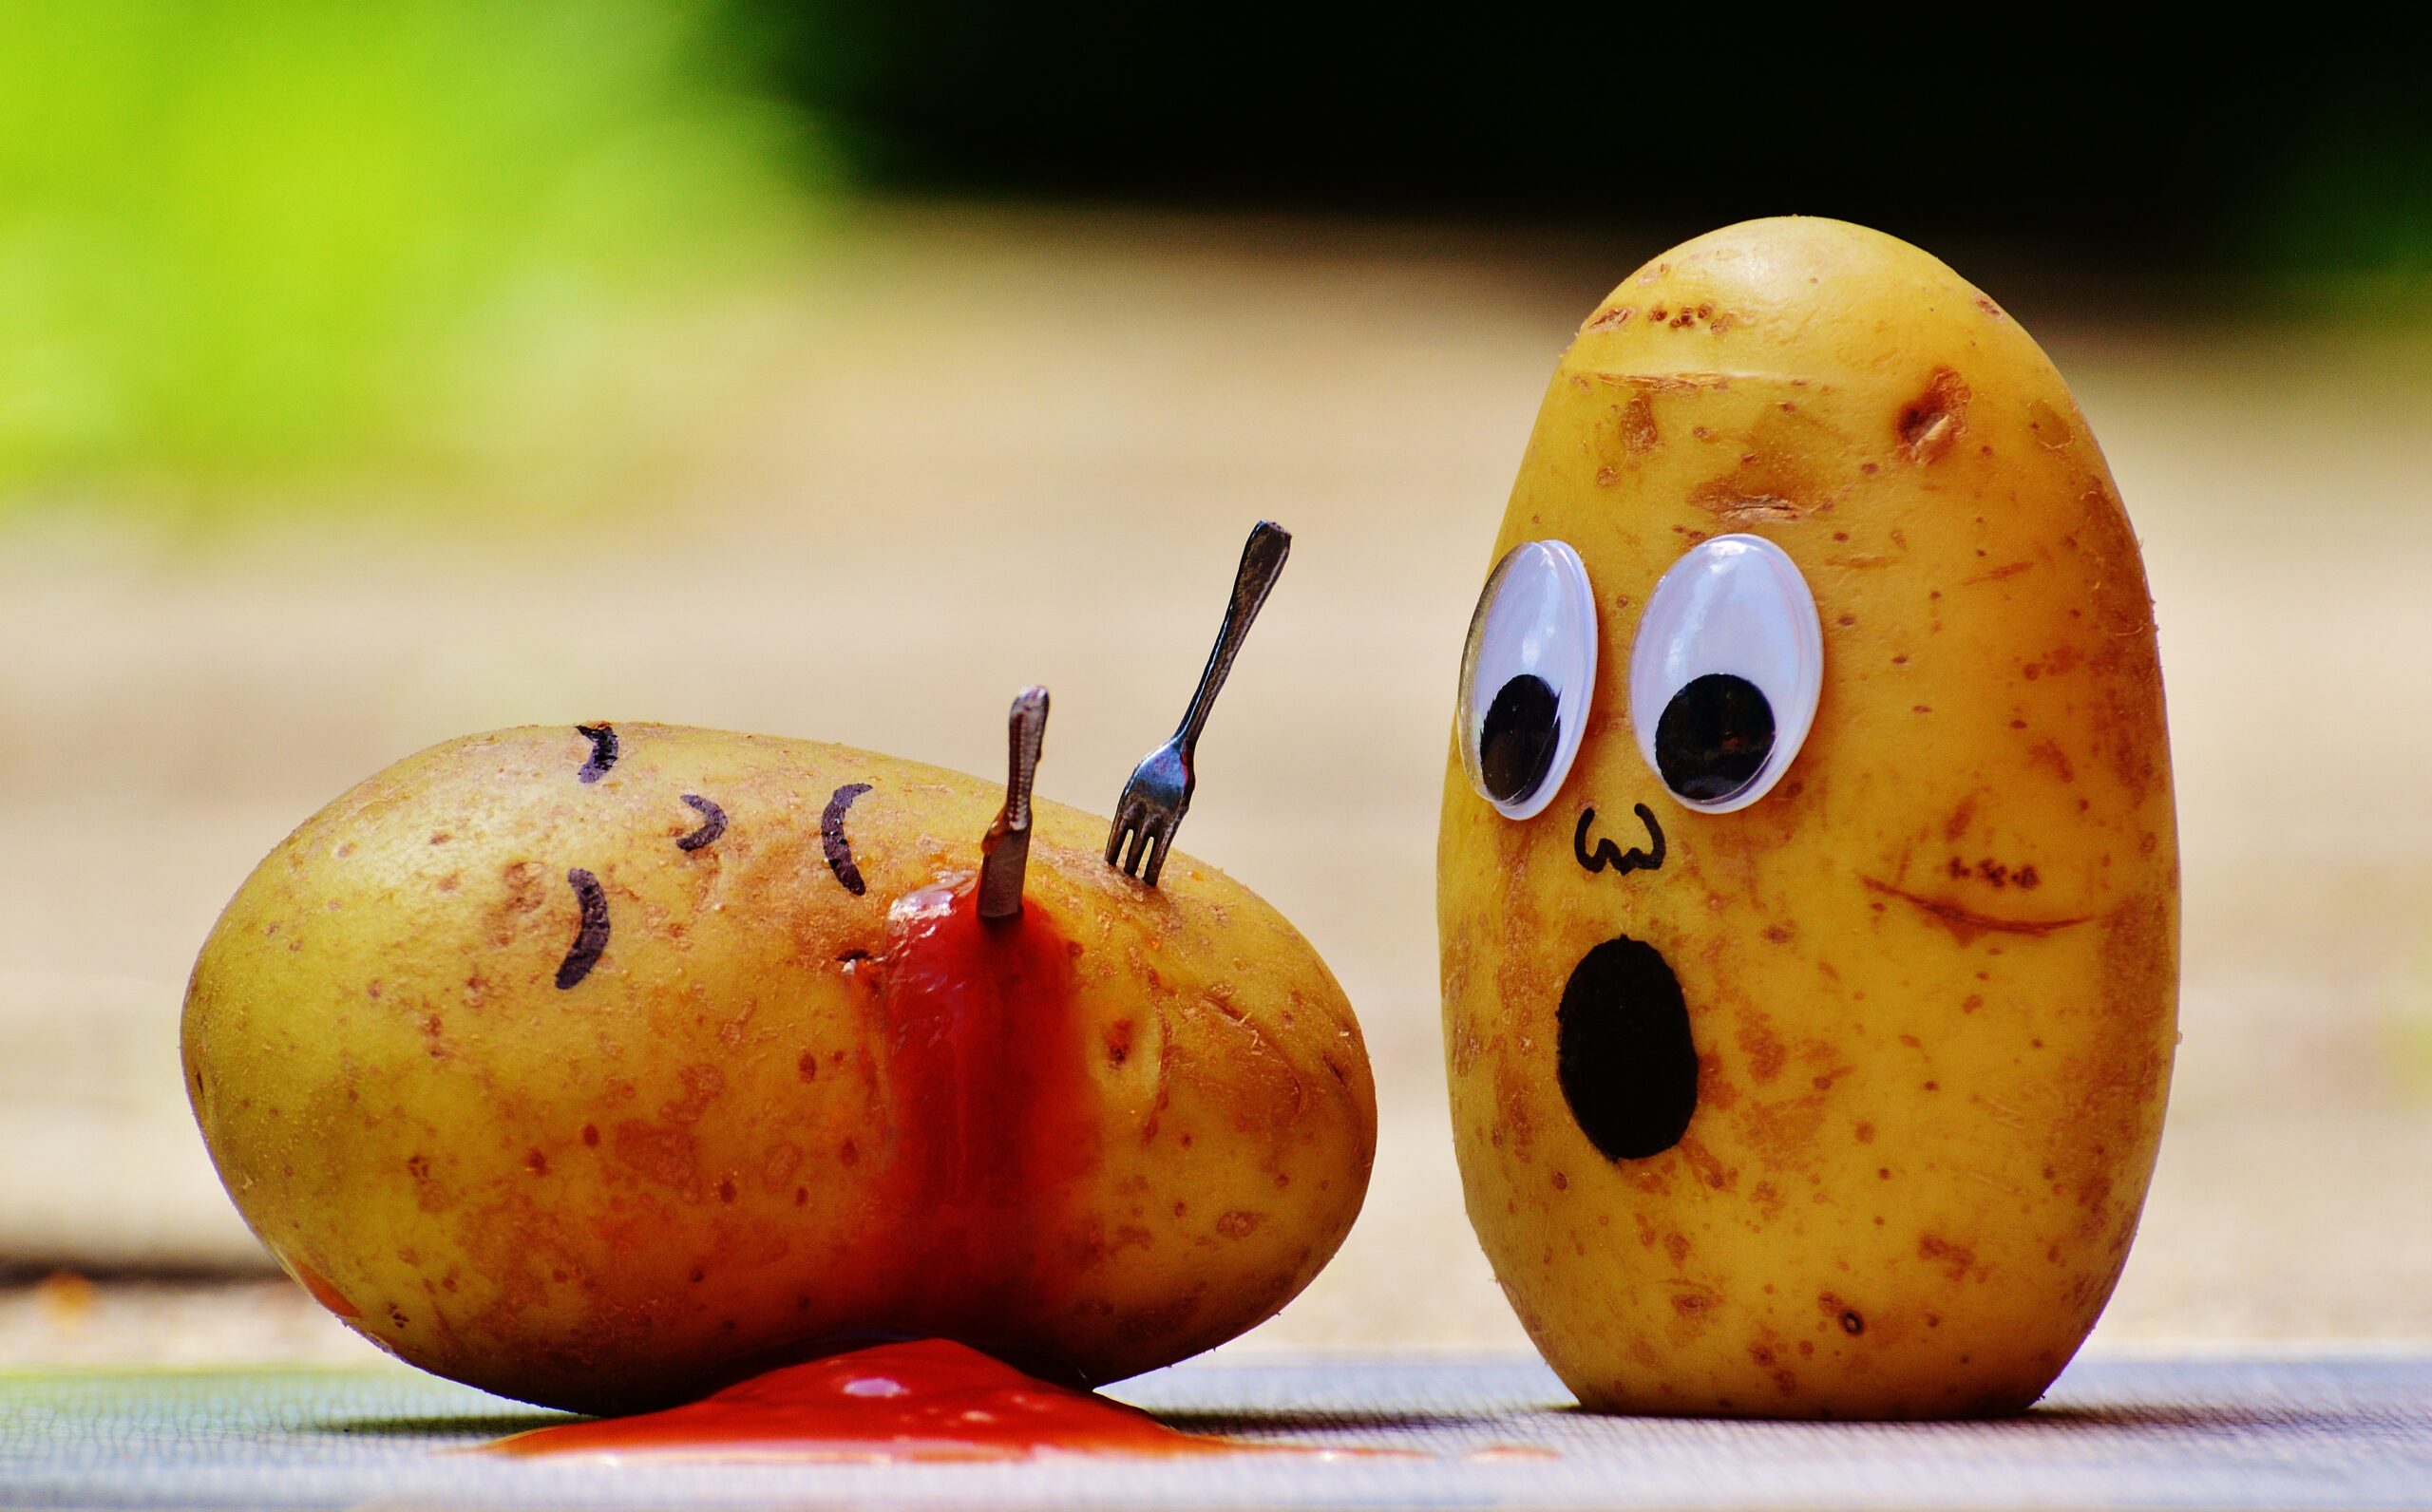 Eating potatoes won’t actually kill you